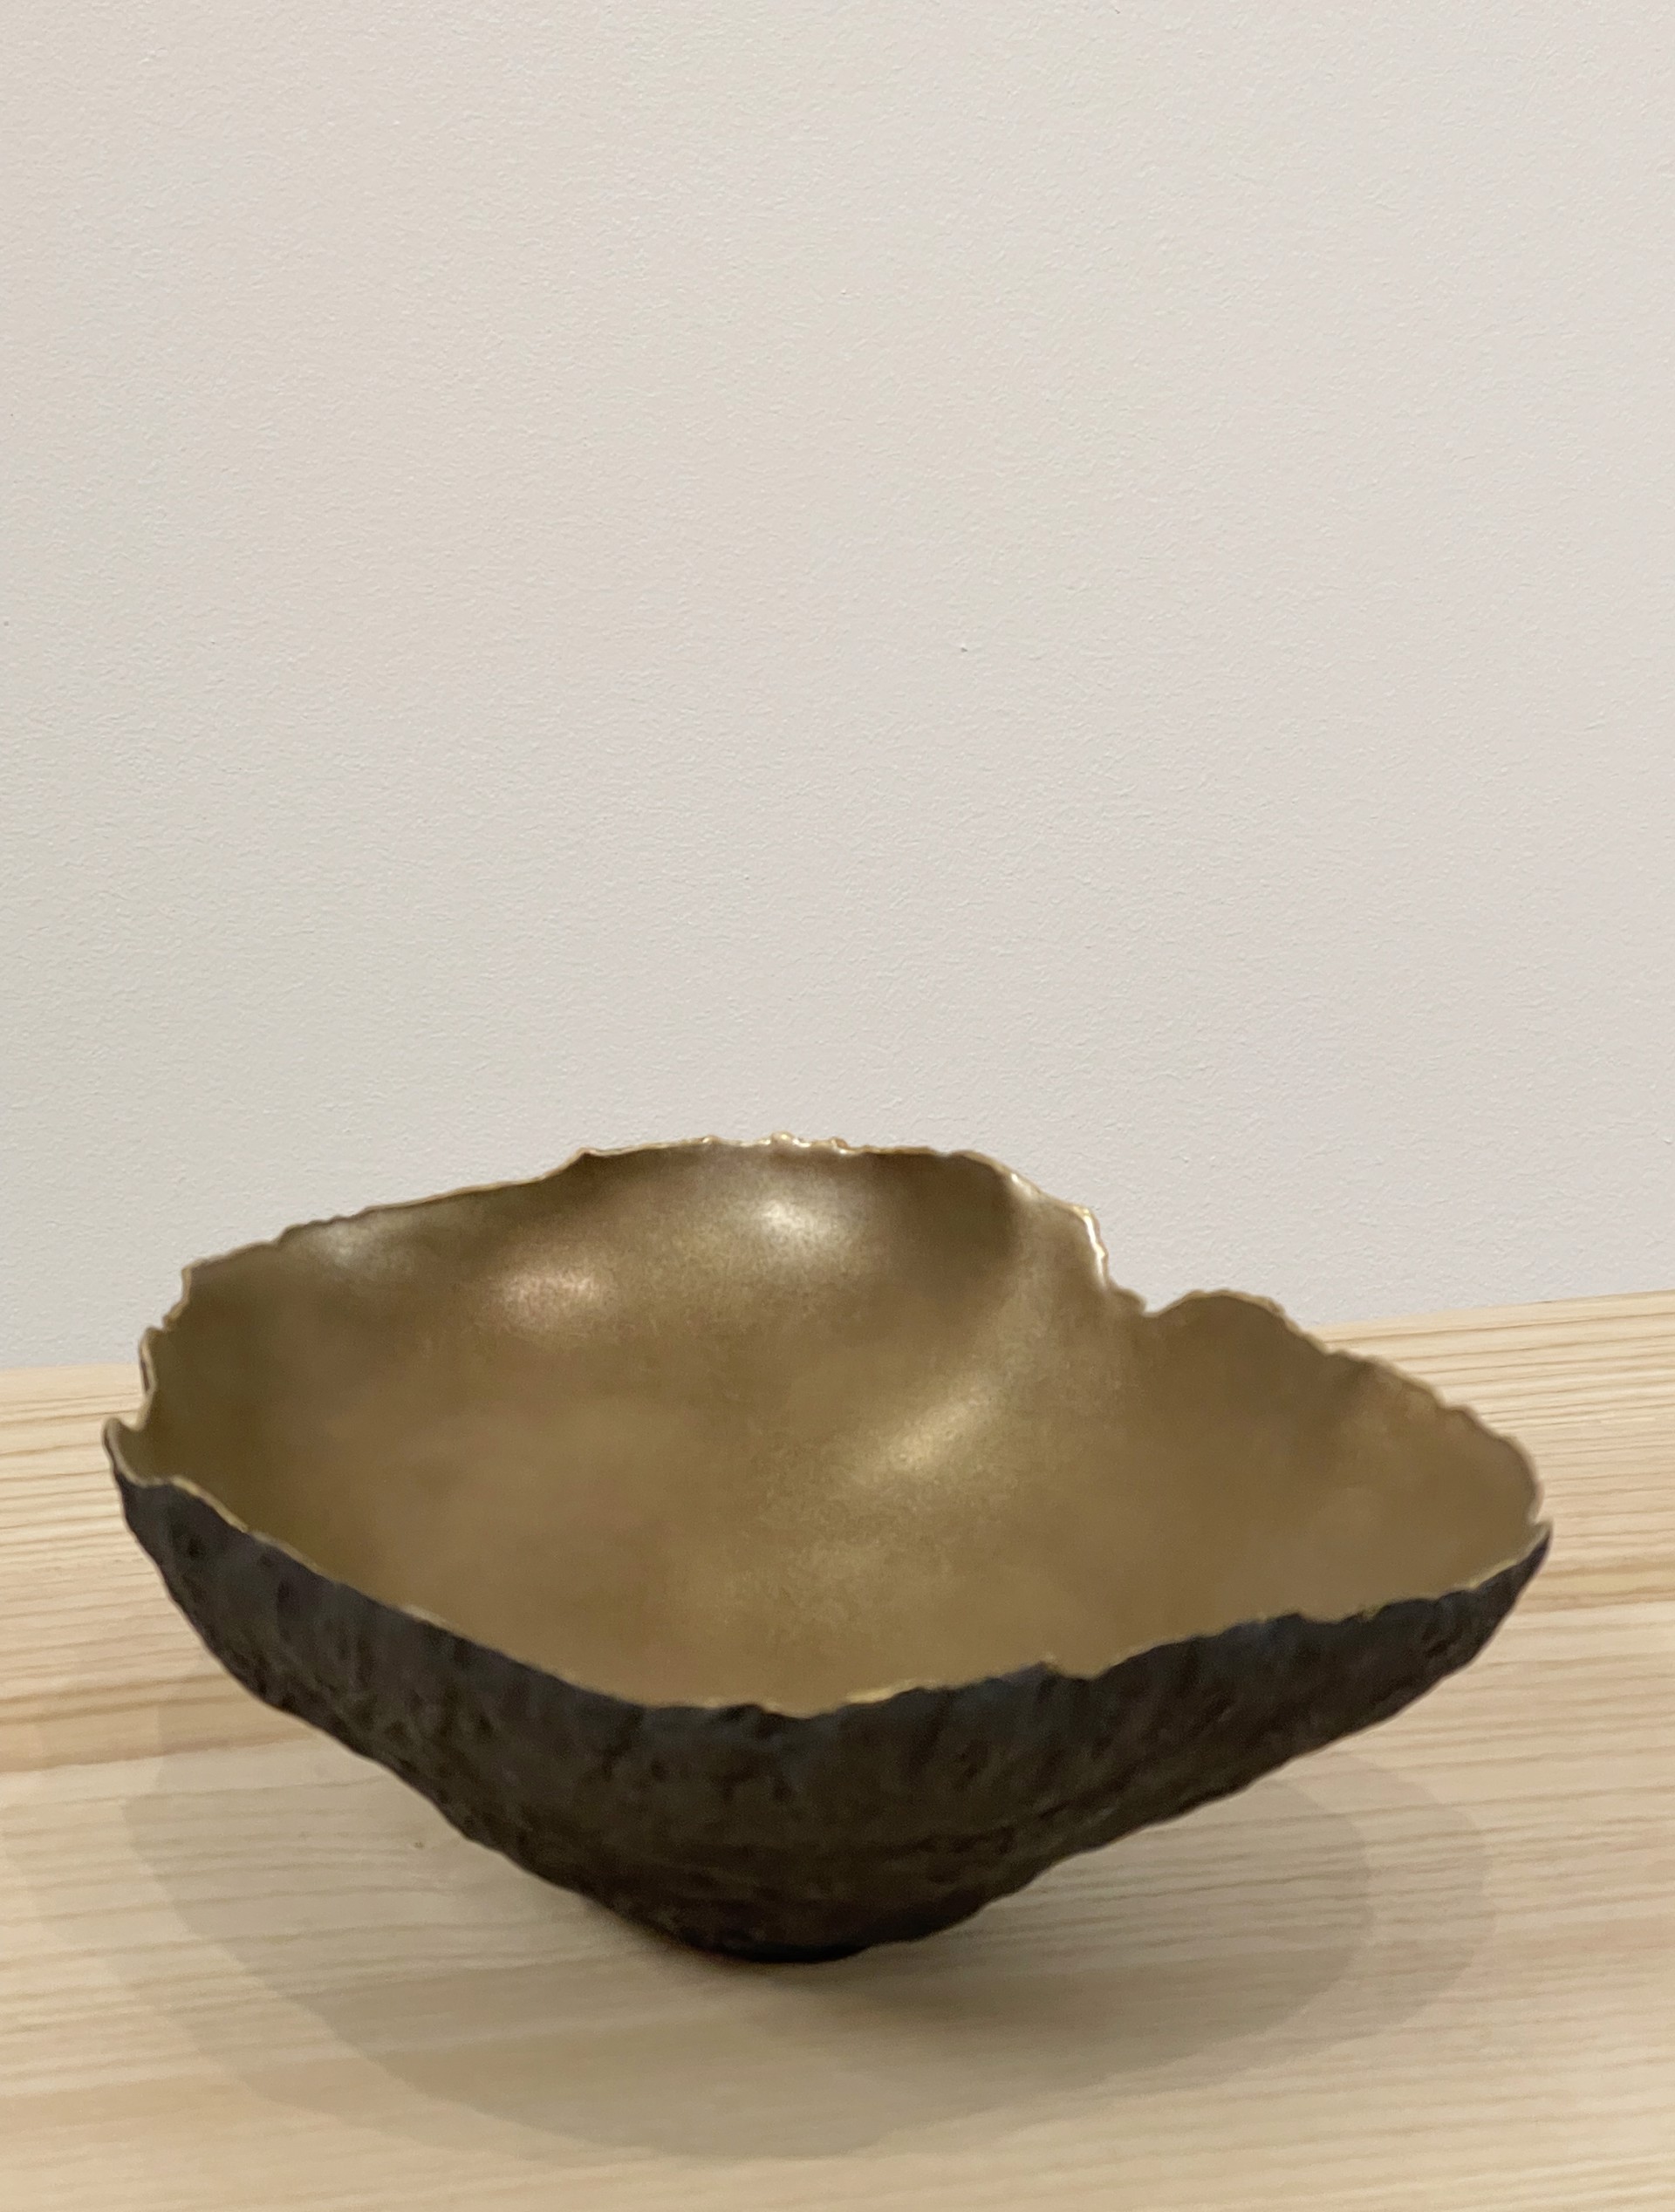 Organic ceramic with bronze glaze by Cristina Salusti